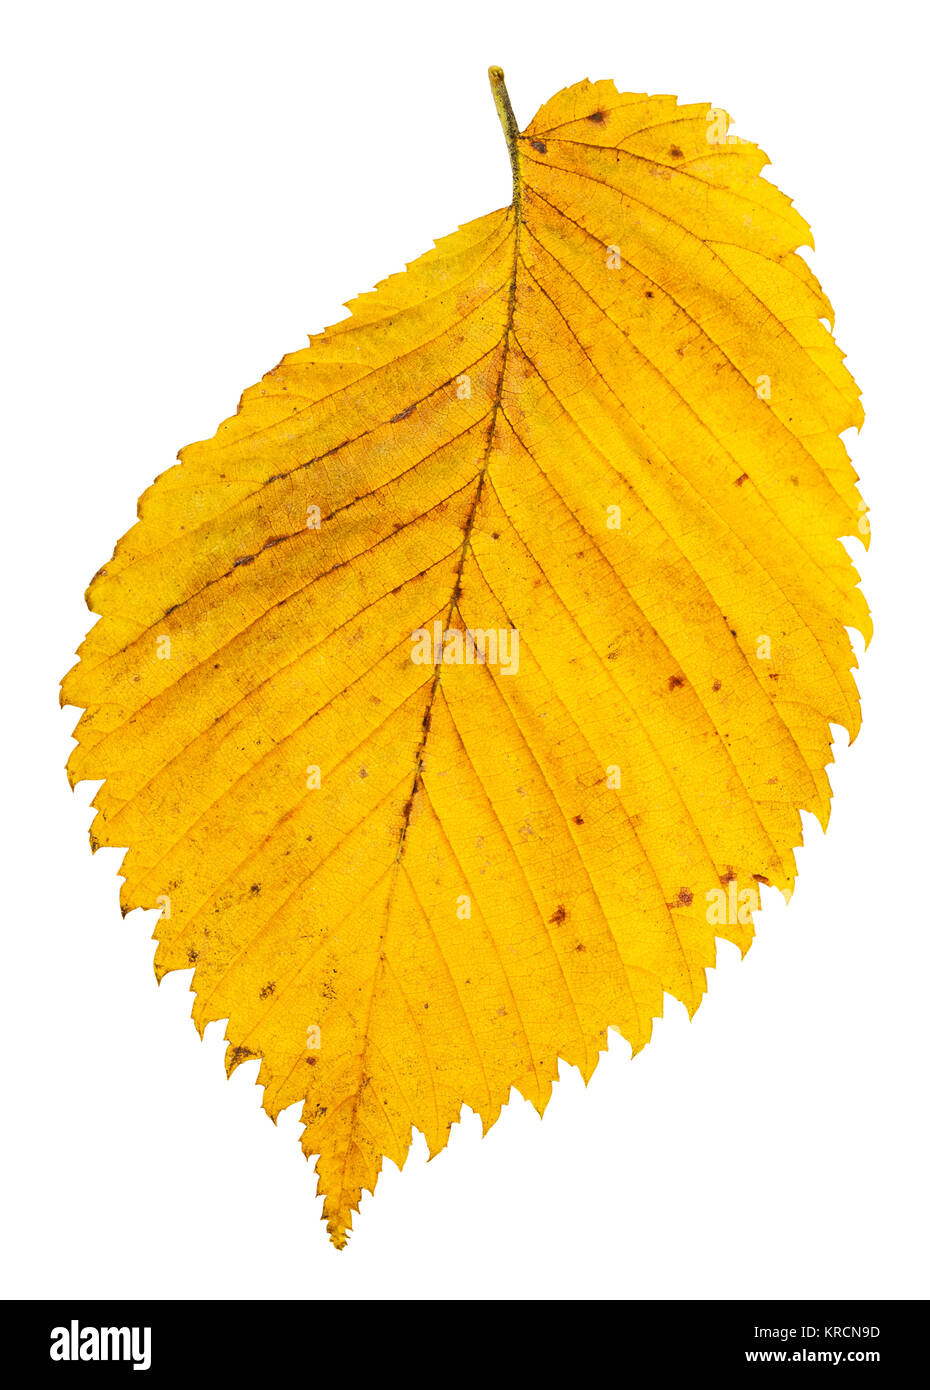 yellow autumn leaf of elm tree isolated on white Stock Photo